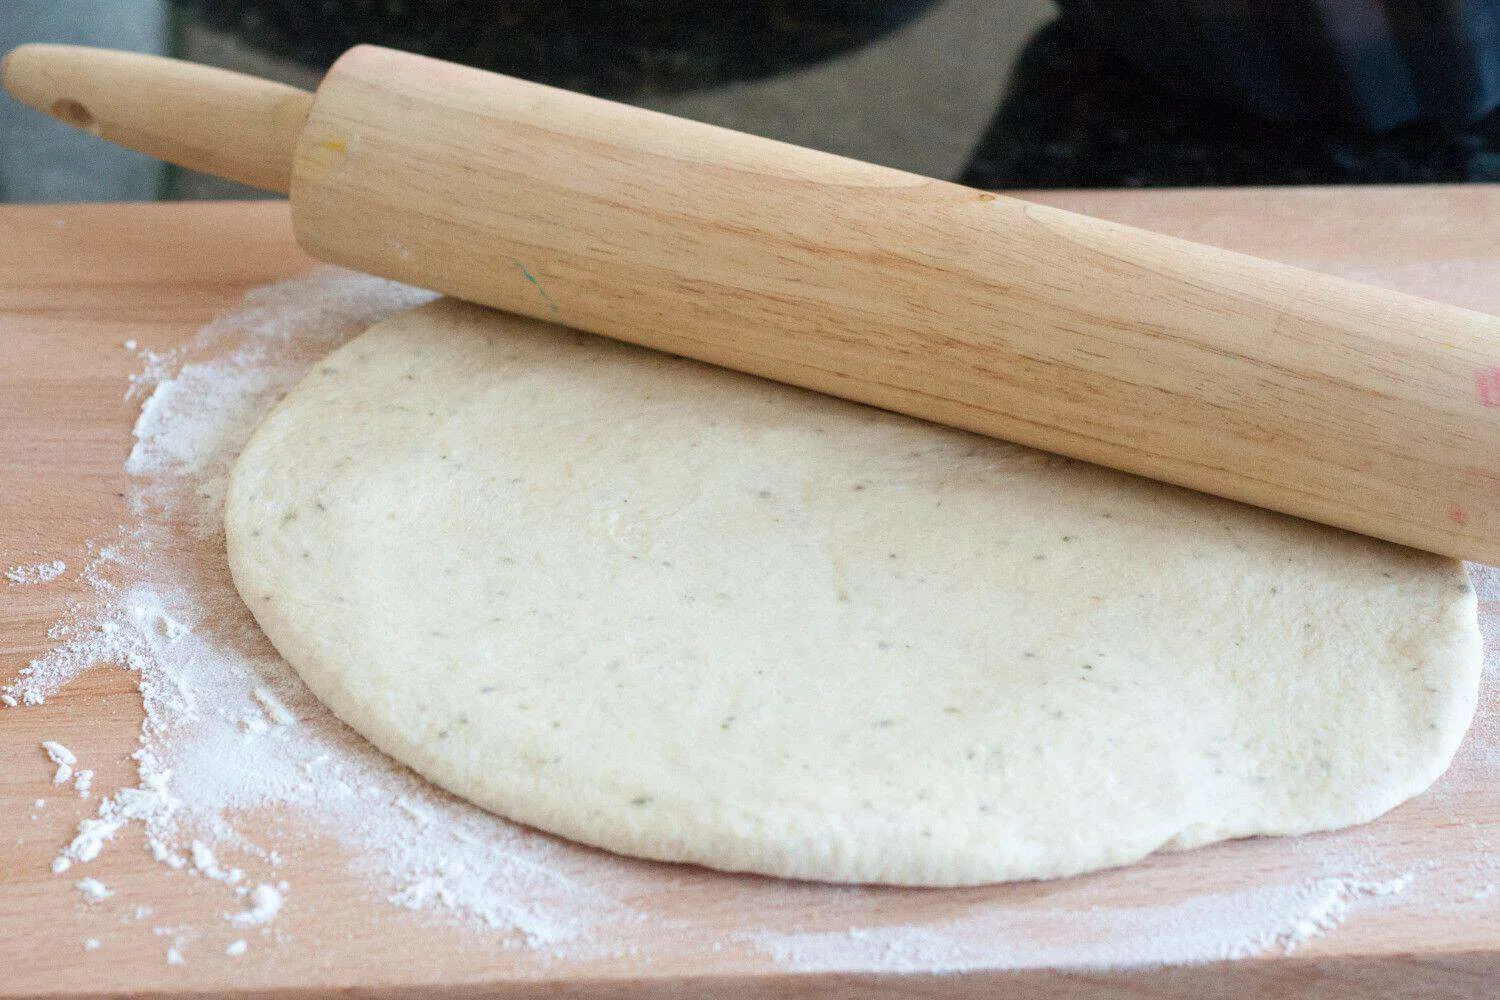 Super easy make-ahead pizza dough using your food processor! Recipe on GoodieGodmother.com